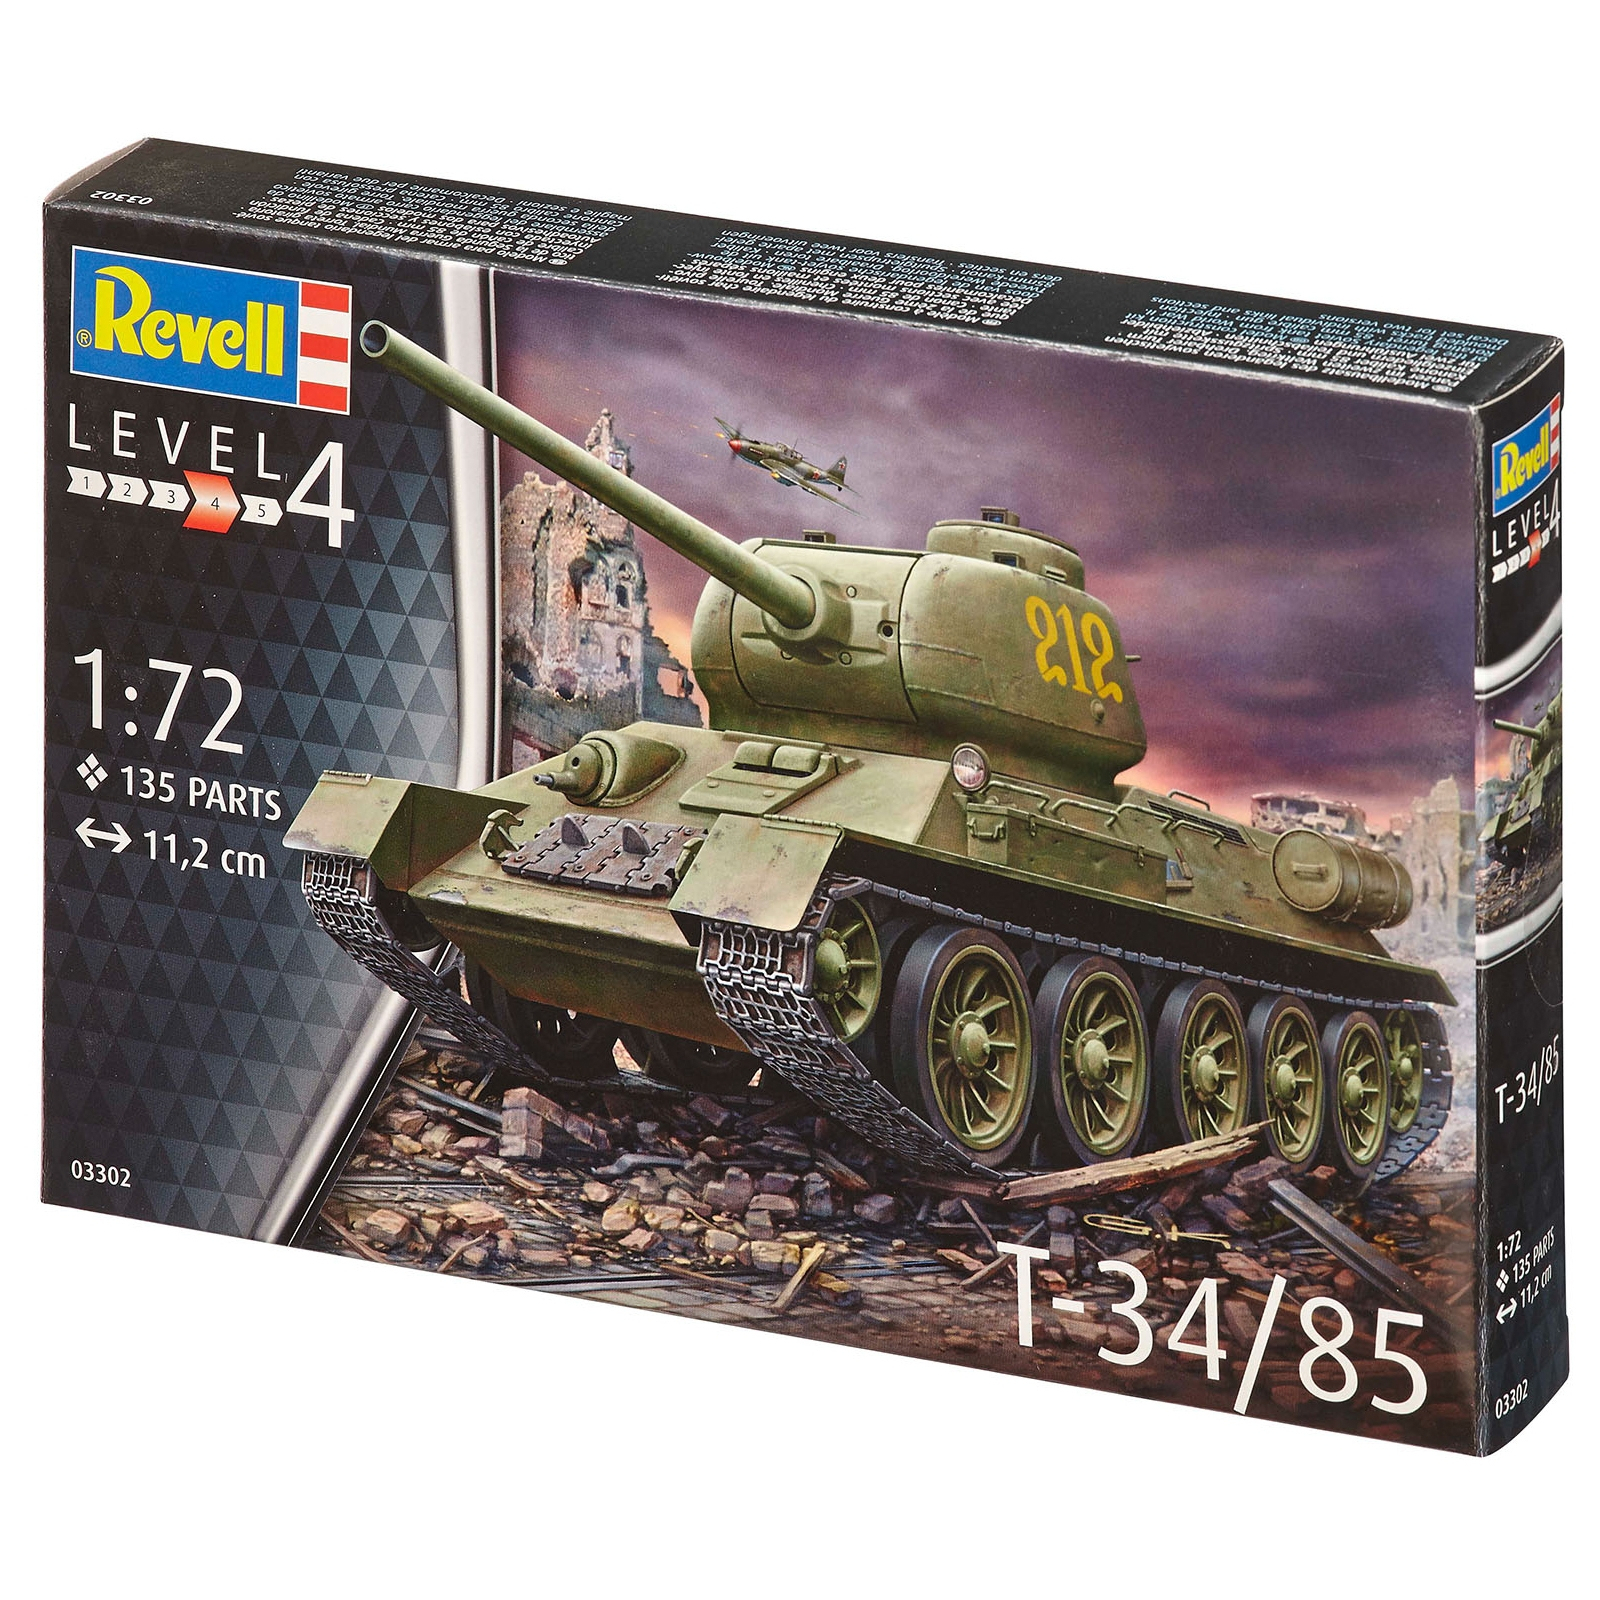 Збірна модель Revell Танк Т-34/85 рівень 4, 1:72 (RVL-03302)